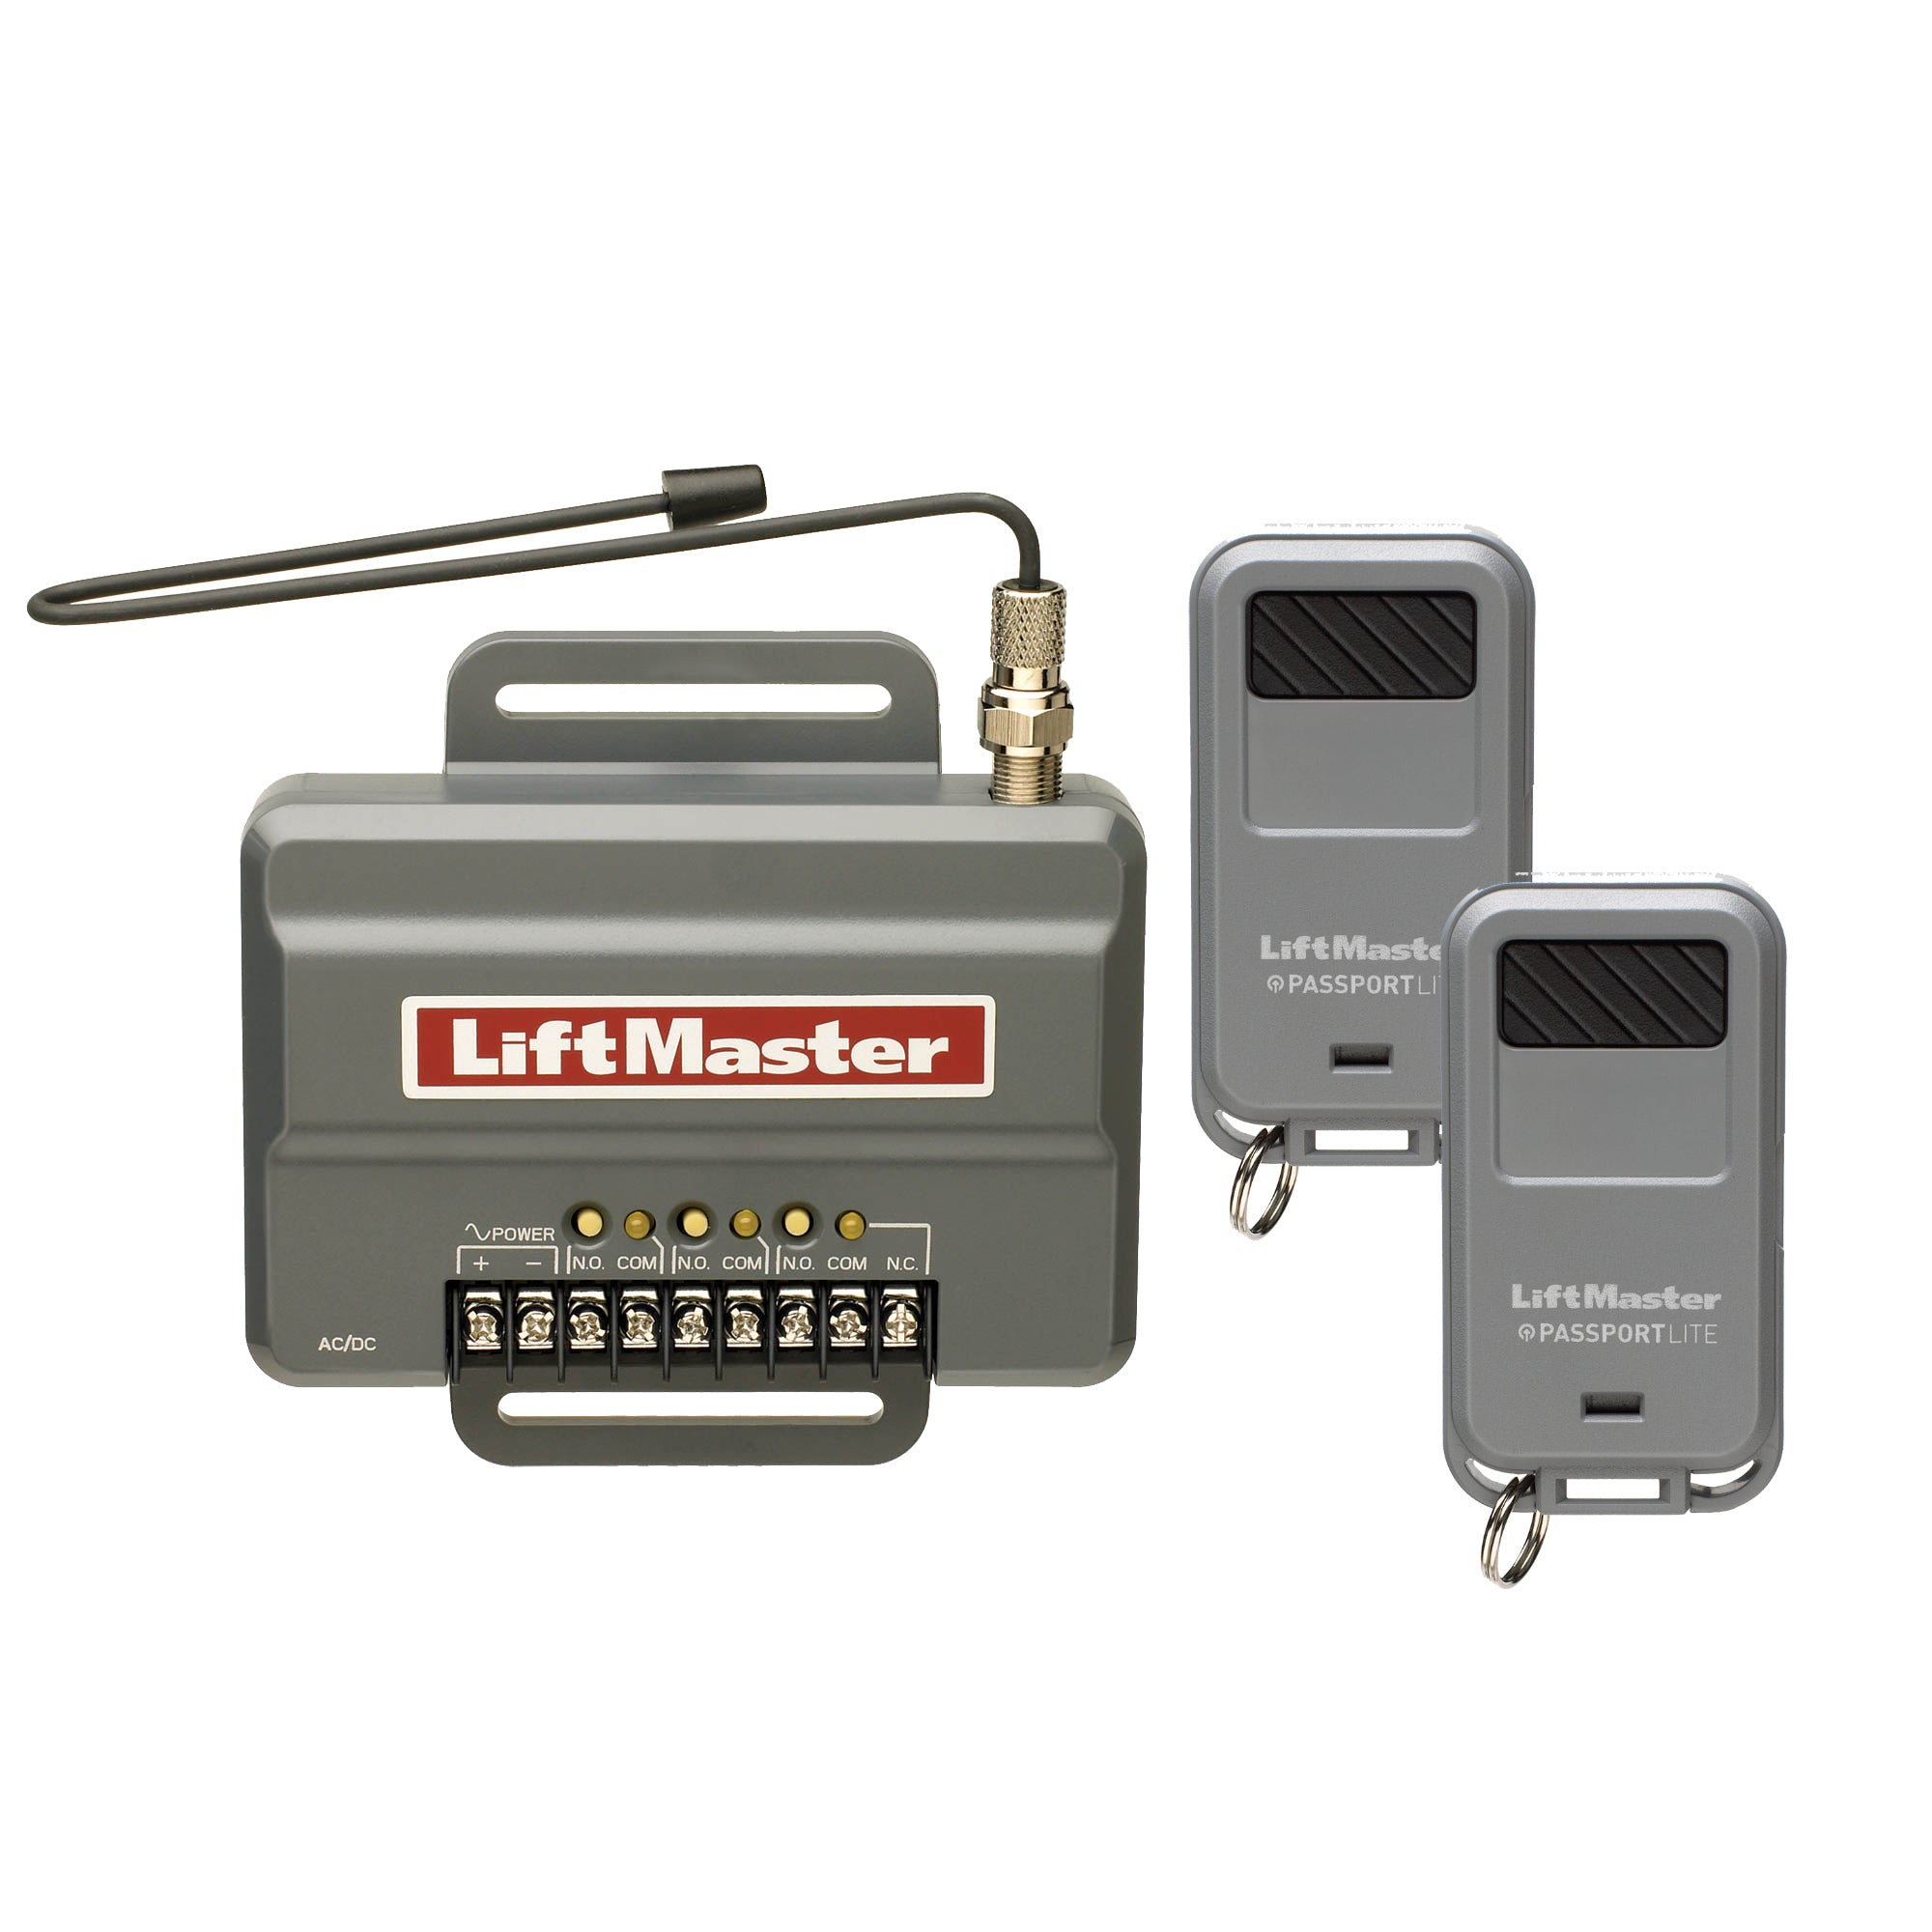 Liftmaster 850LM Radio Receiver And 2 Passport Remotes Set